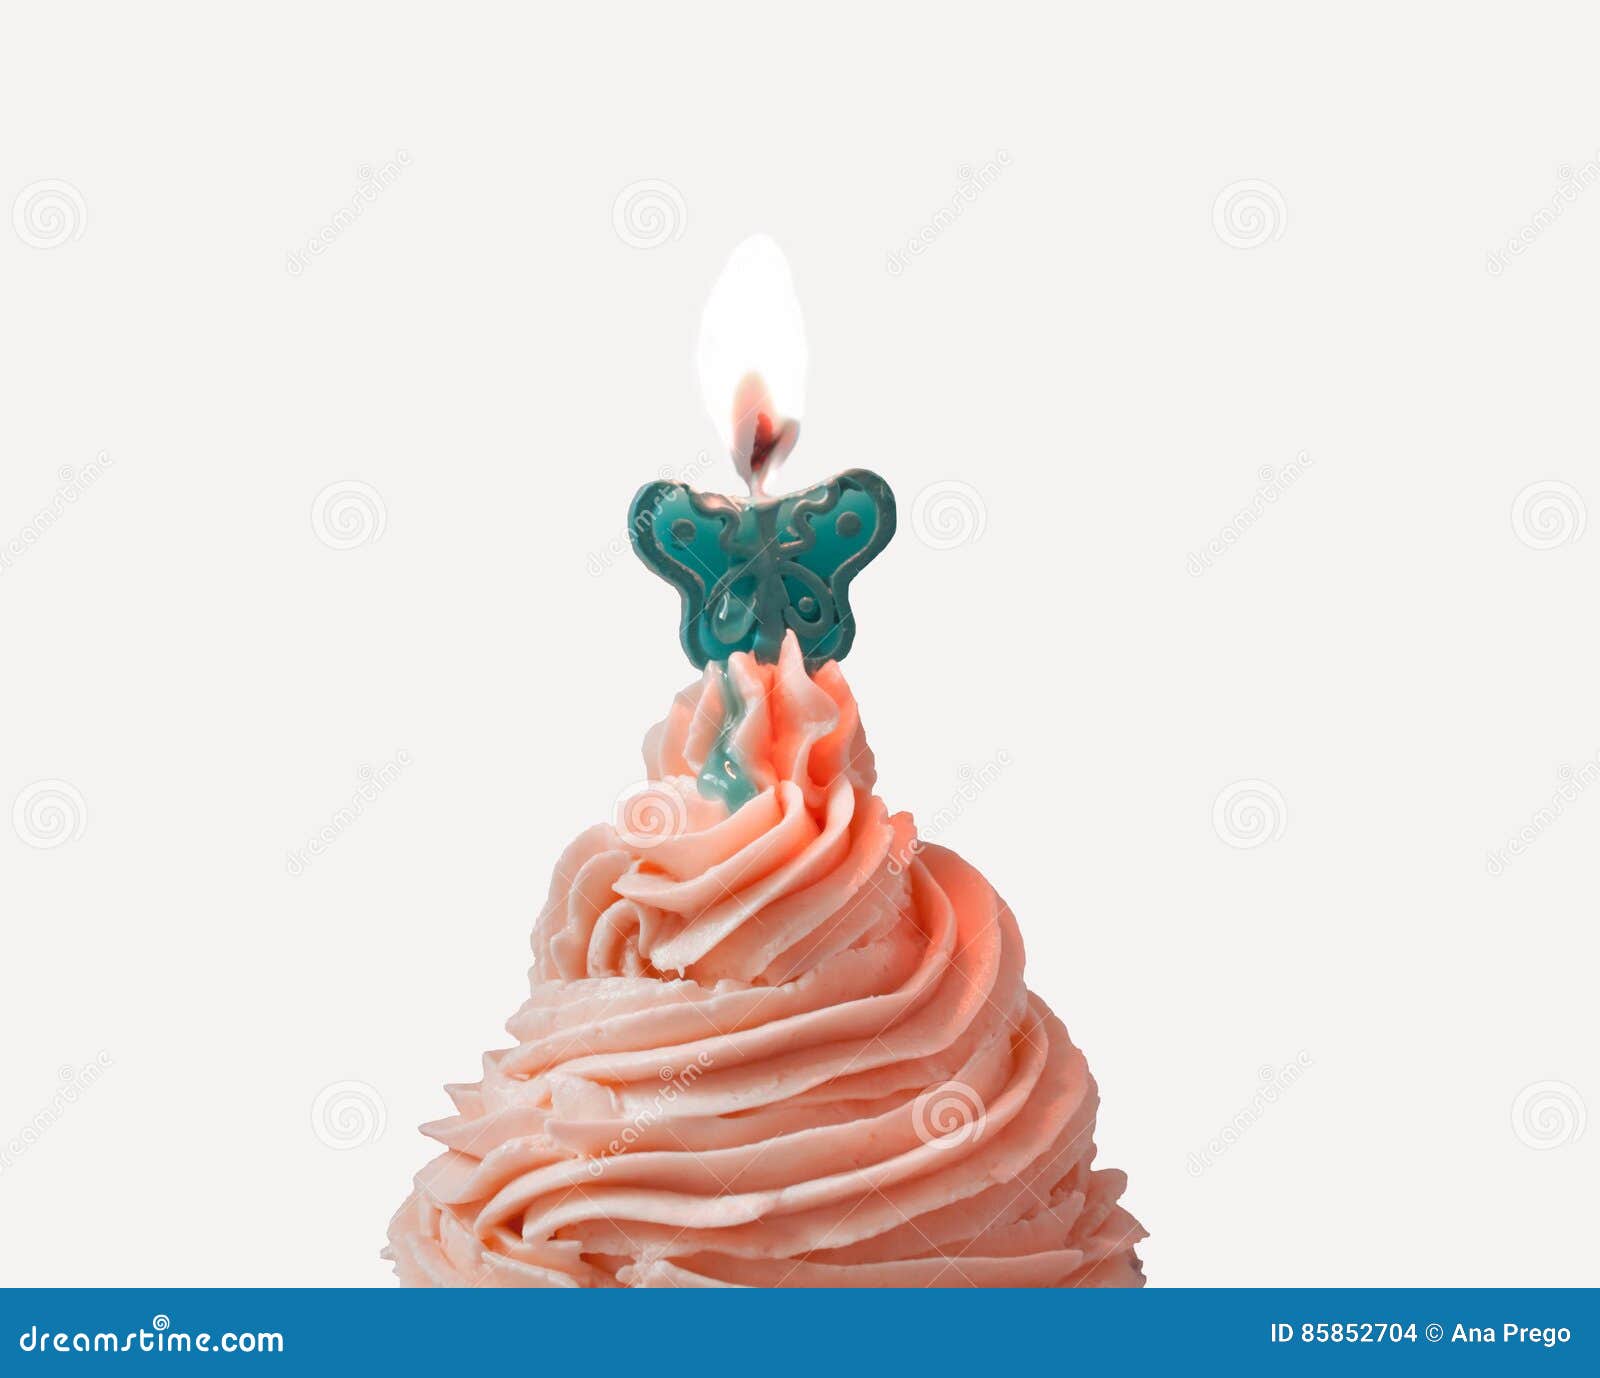 cupcake cream and candlelight